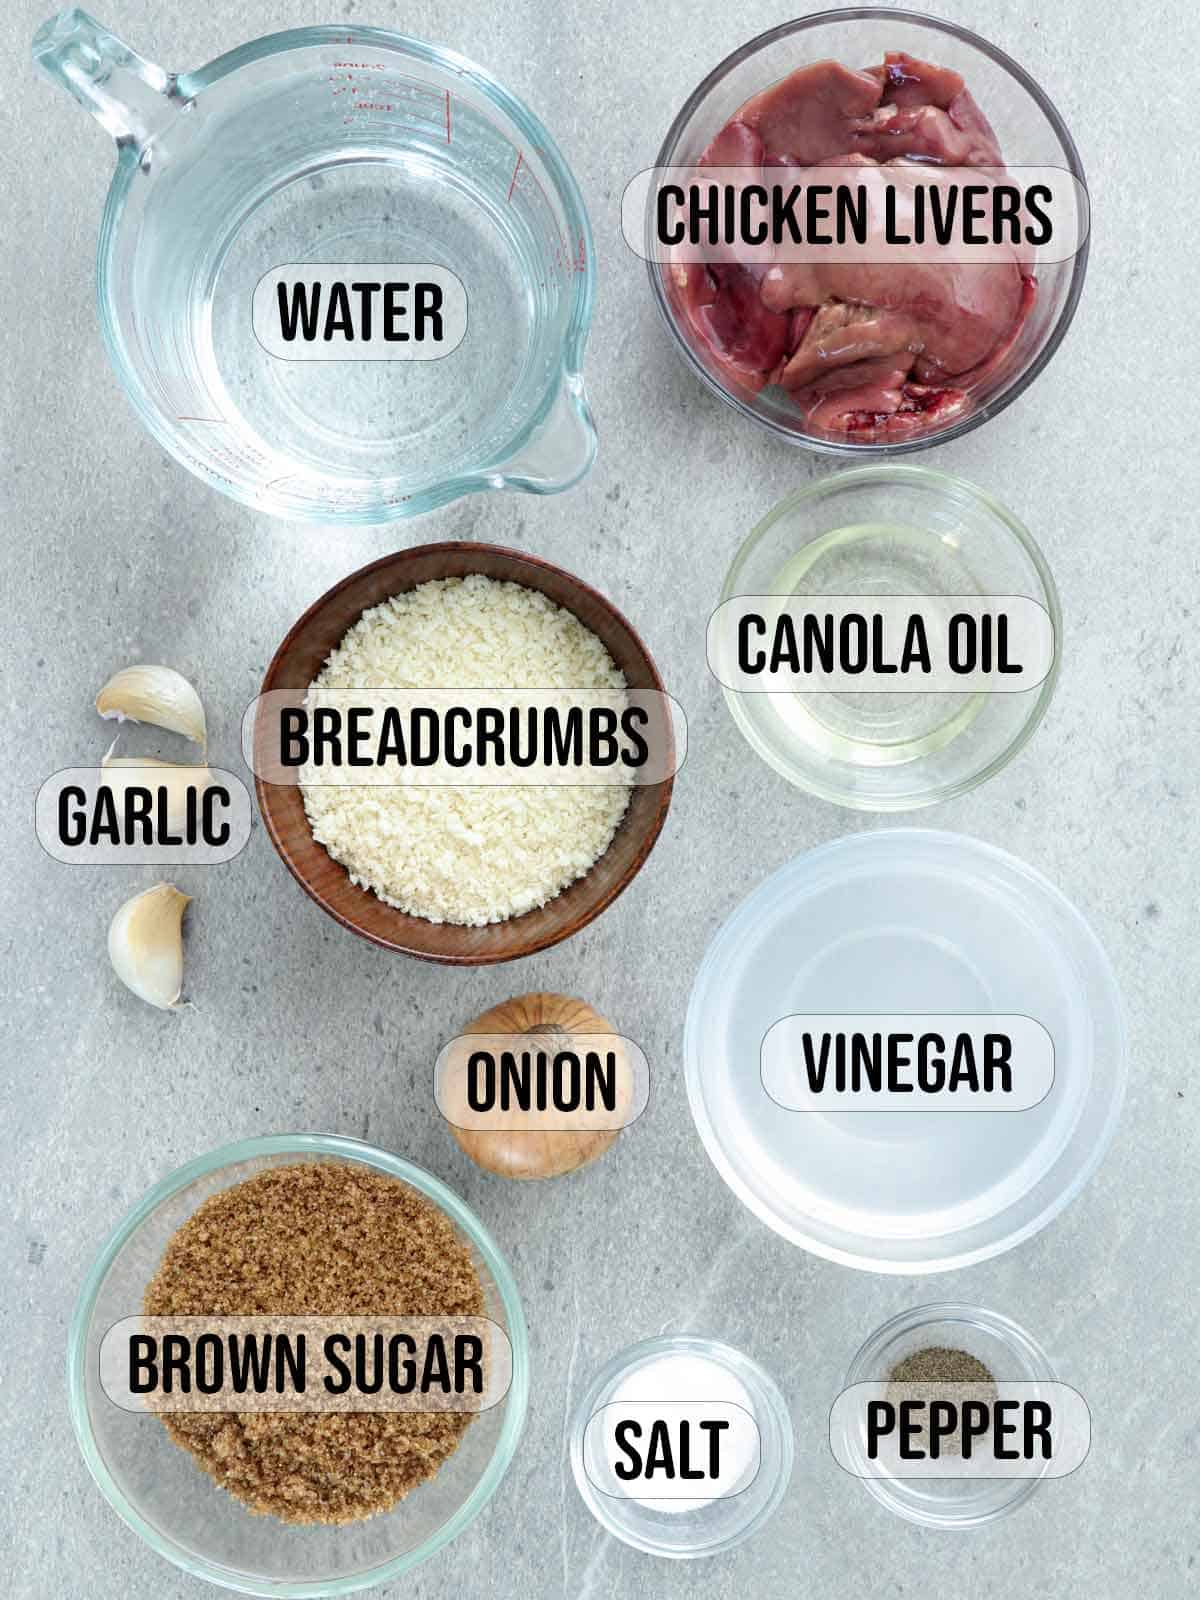 brown sugar, vinegar, onions, garlic, oil, water, liver, breadcrumbs in bowls.